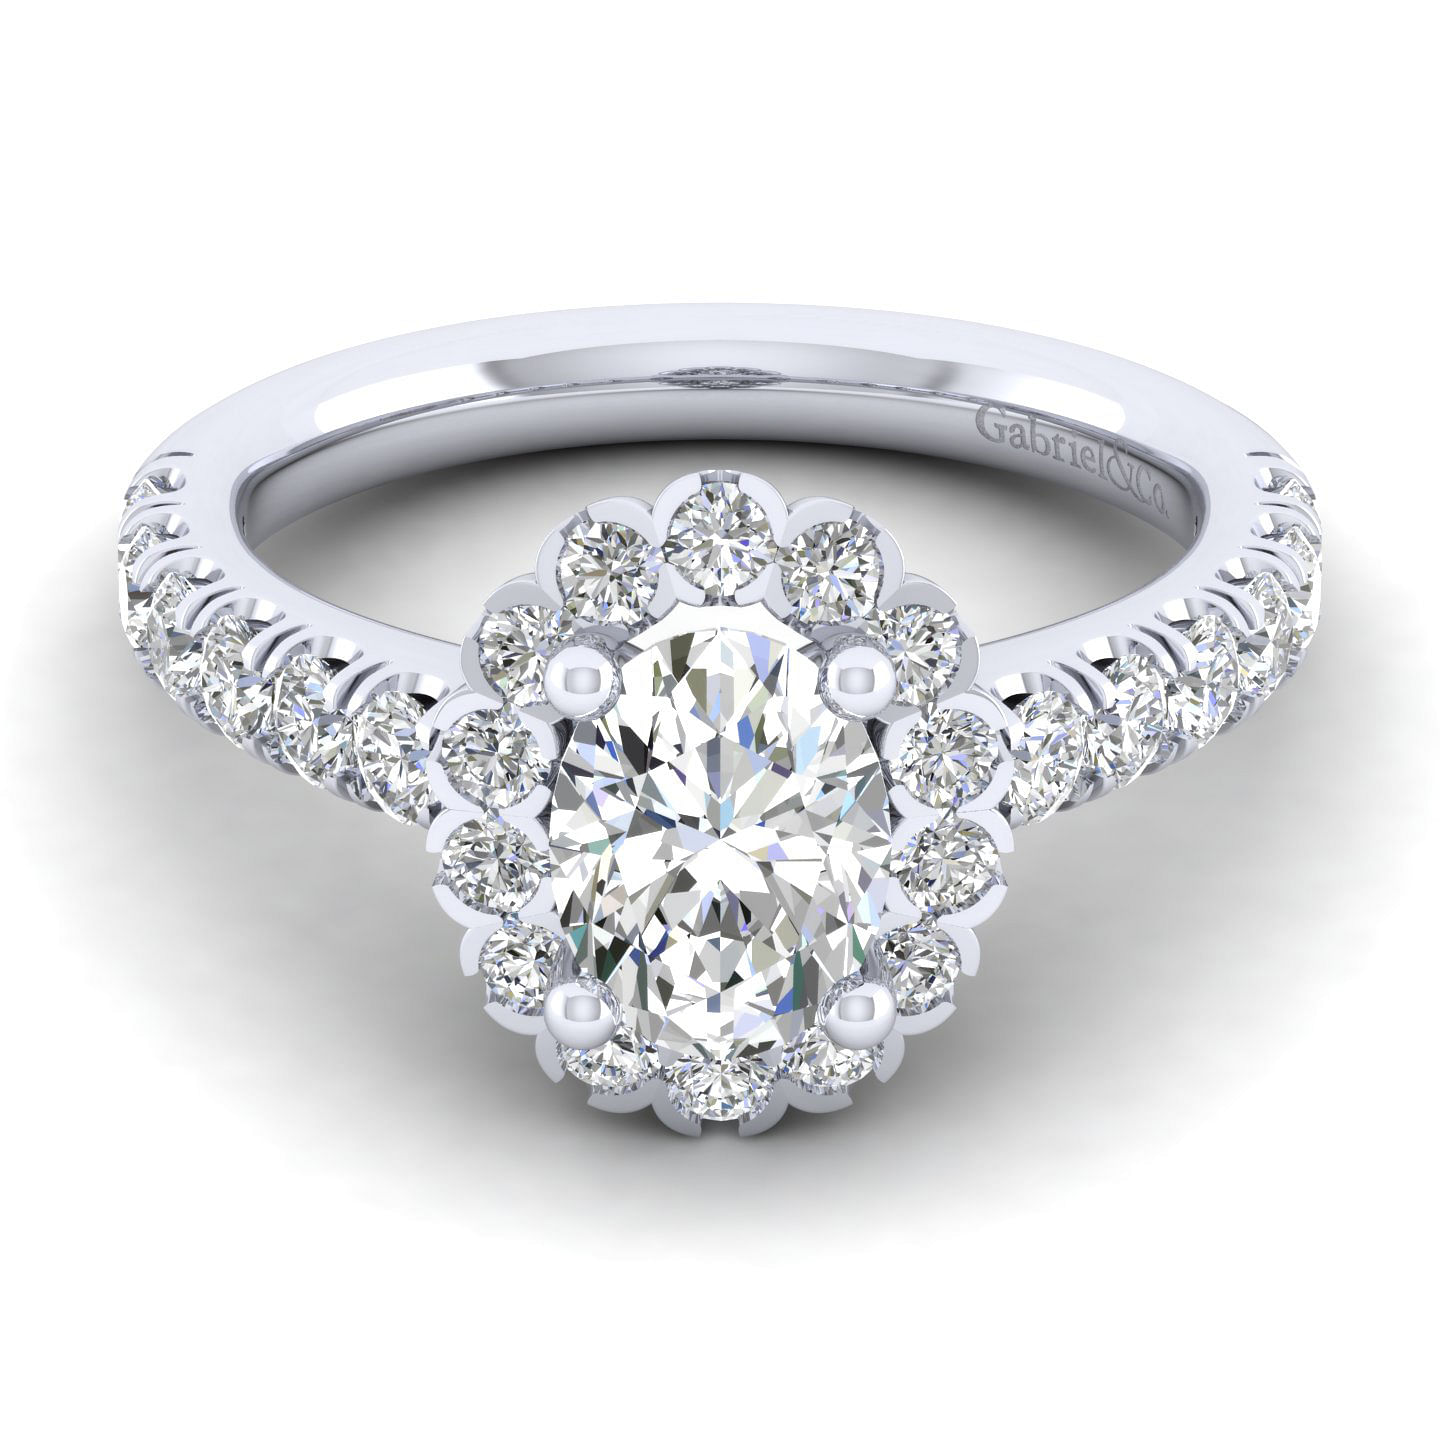 Rosalyn - 14K White Gold Oval Halo Diamond Engagement Ring